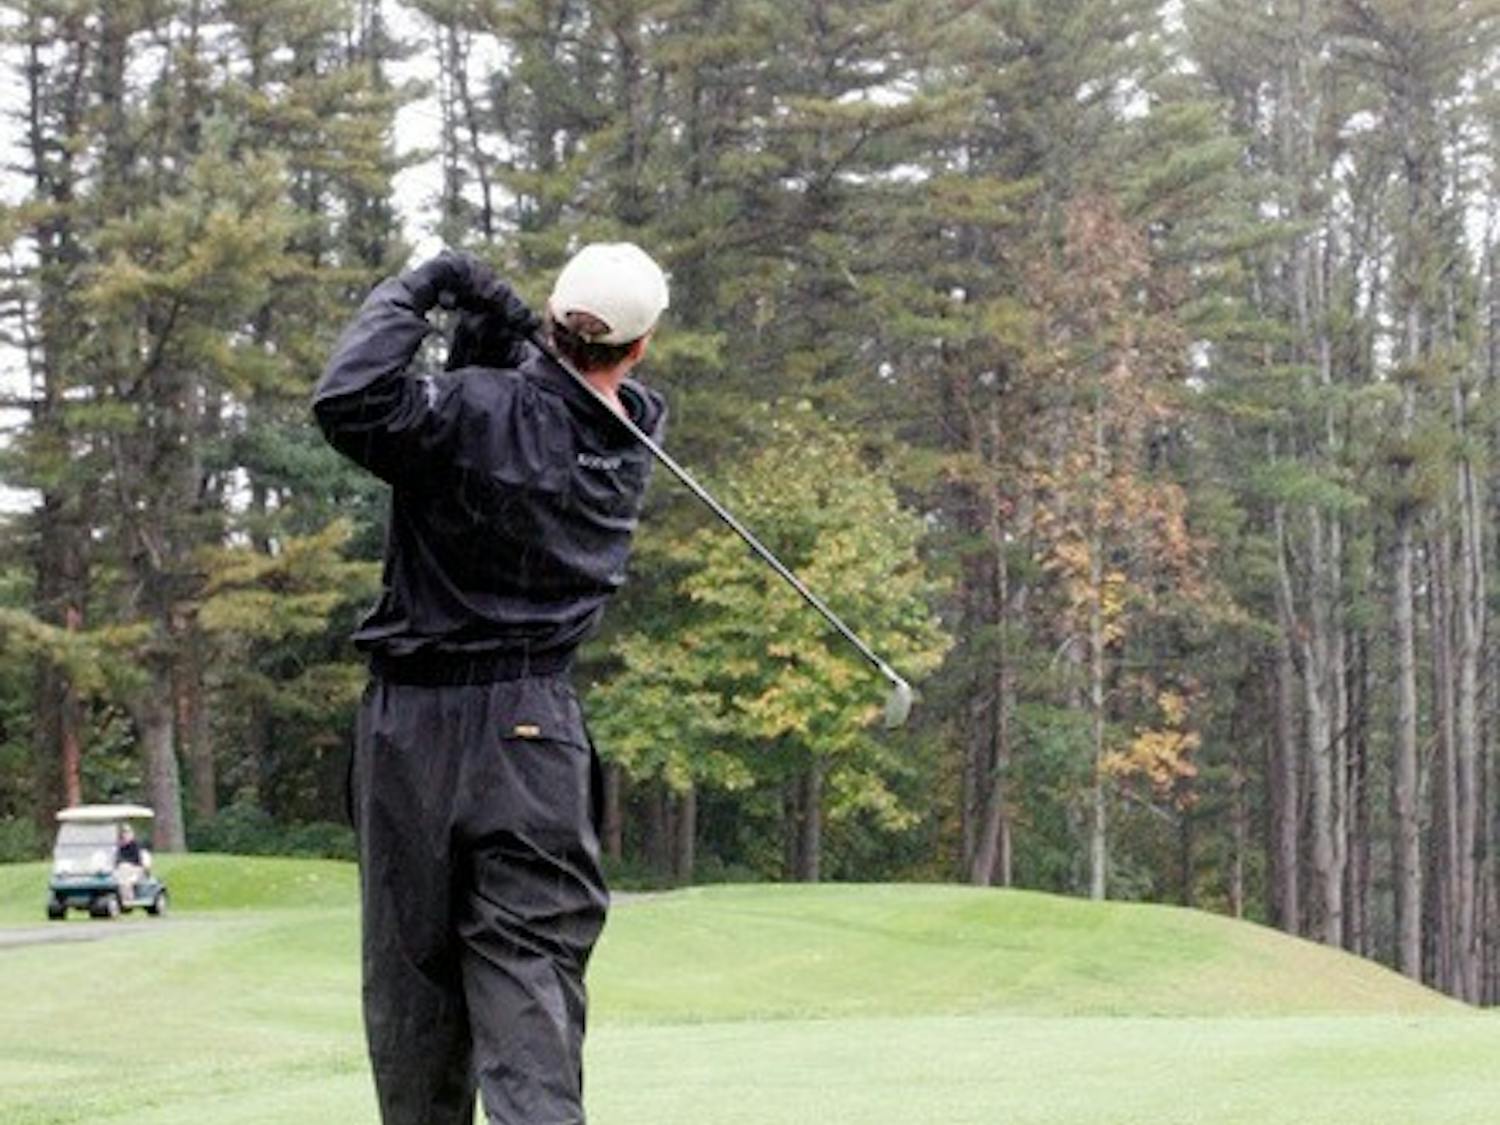 Dartmouth's men's golf team has found early success in the fall season.